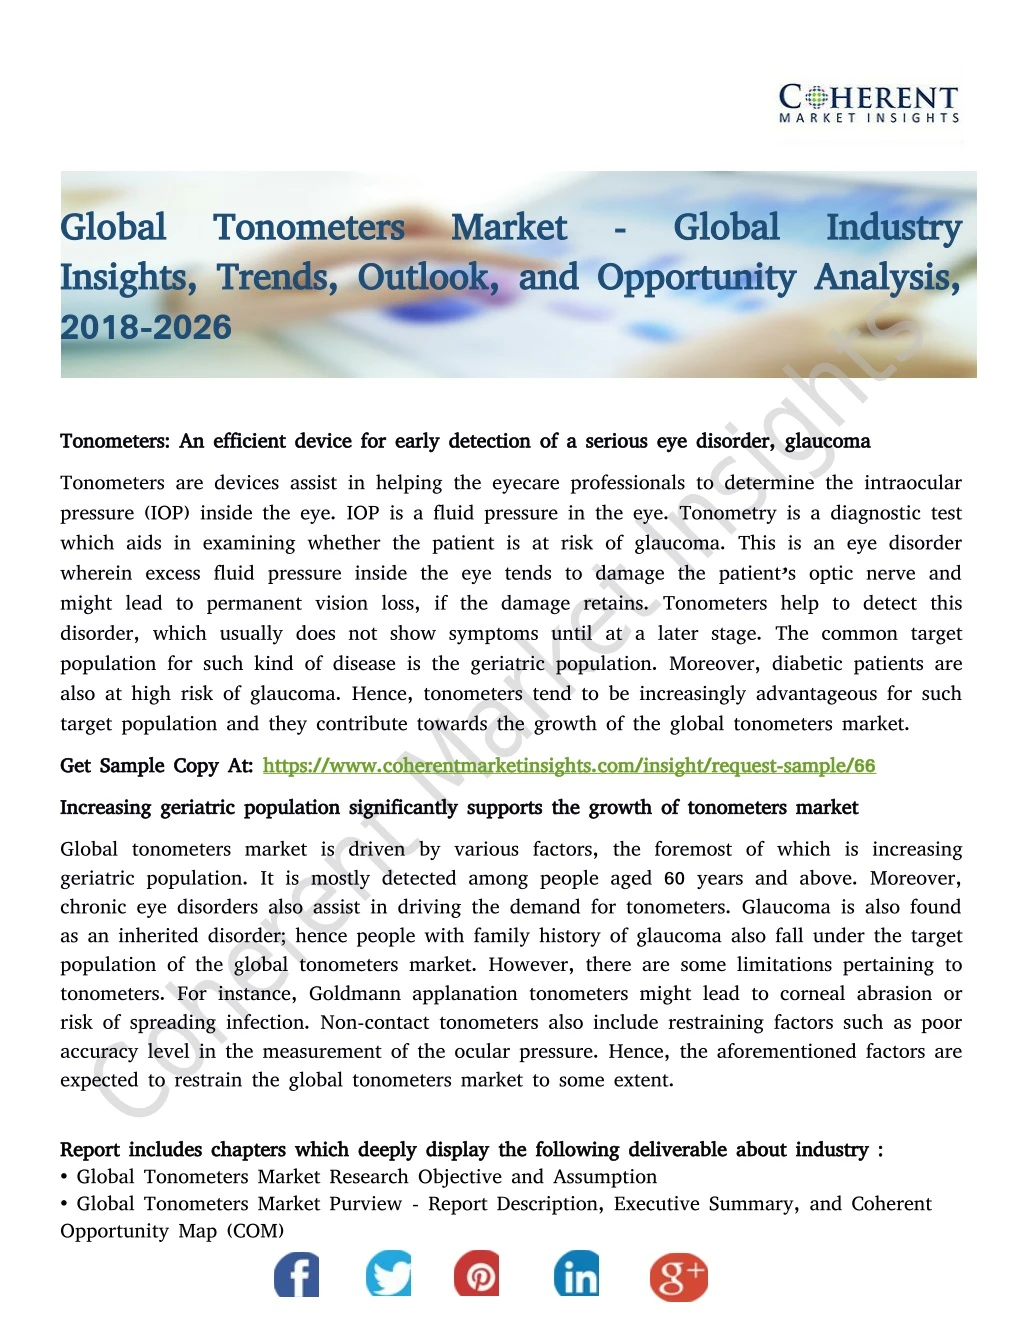 global tonometers market global industry global